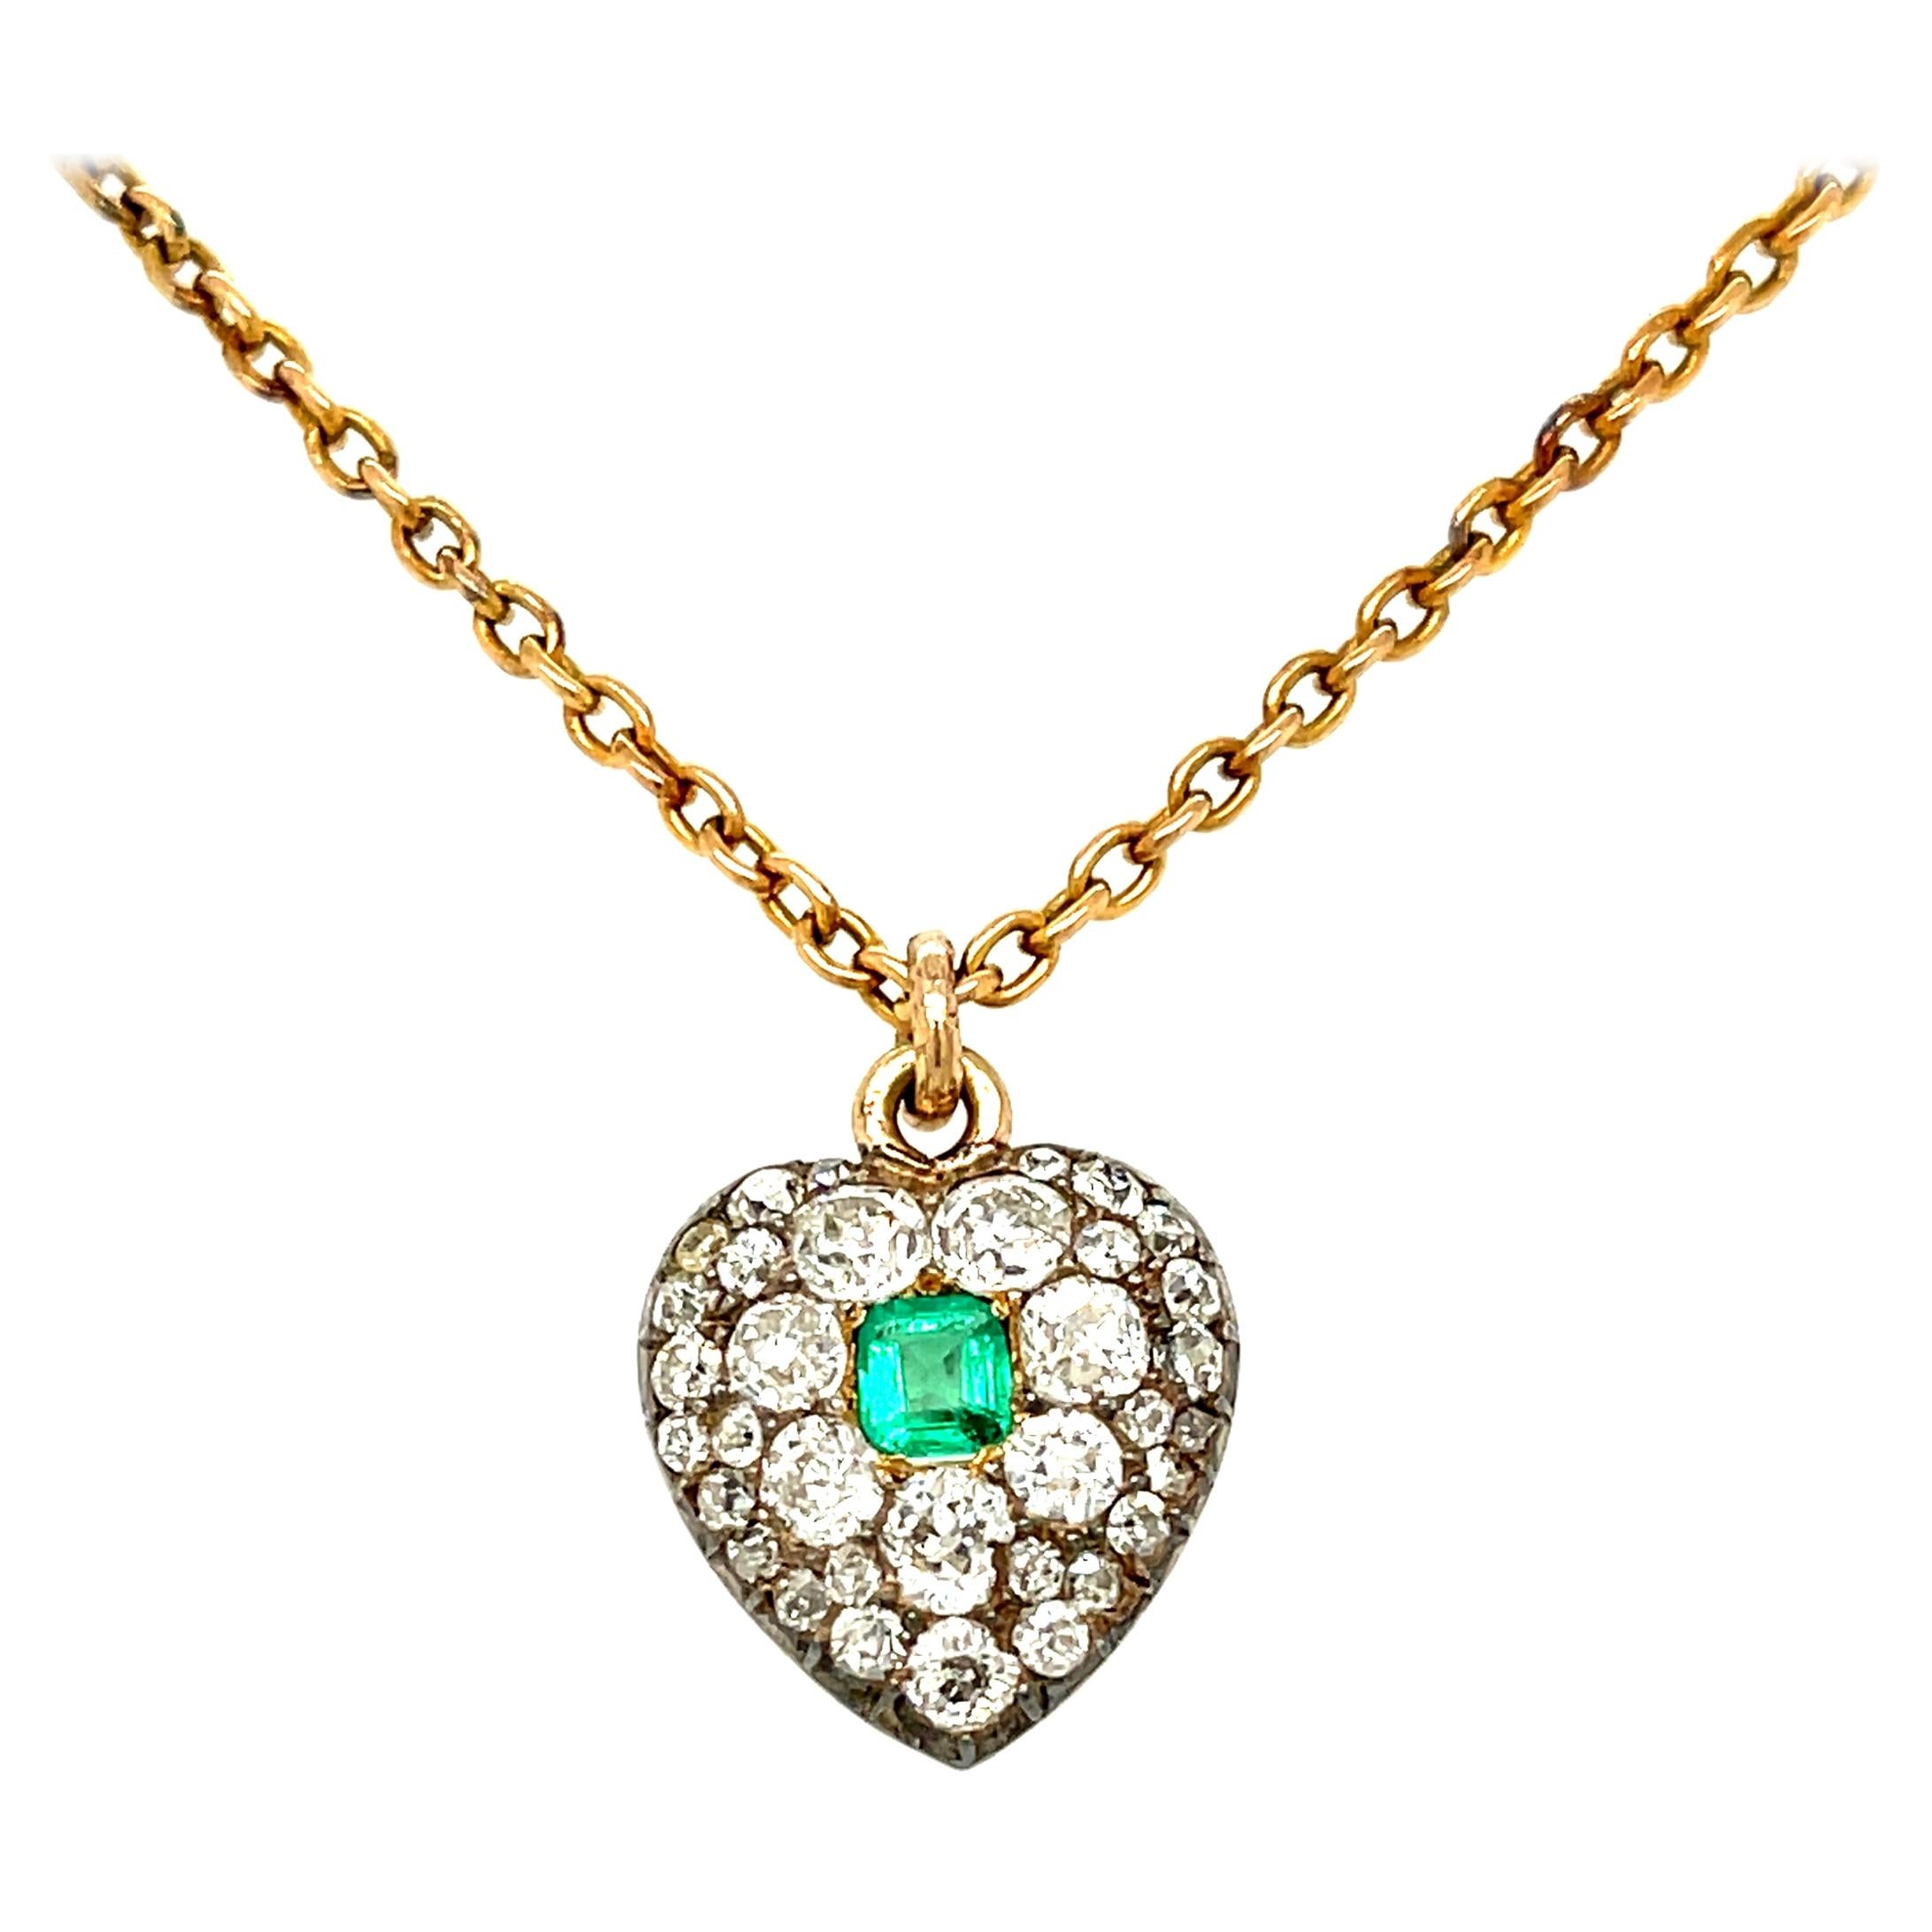 Antique Victorian Silver Gold Old Cut Diamond Emerald Heart Pendant Necklace